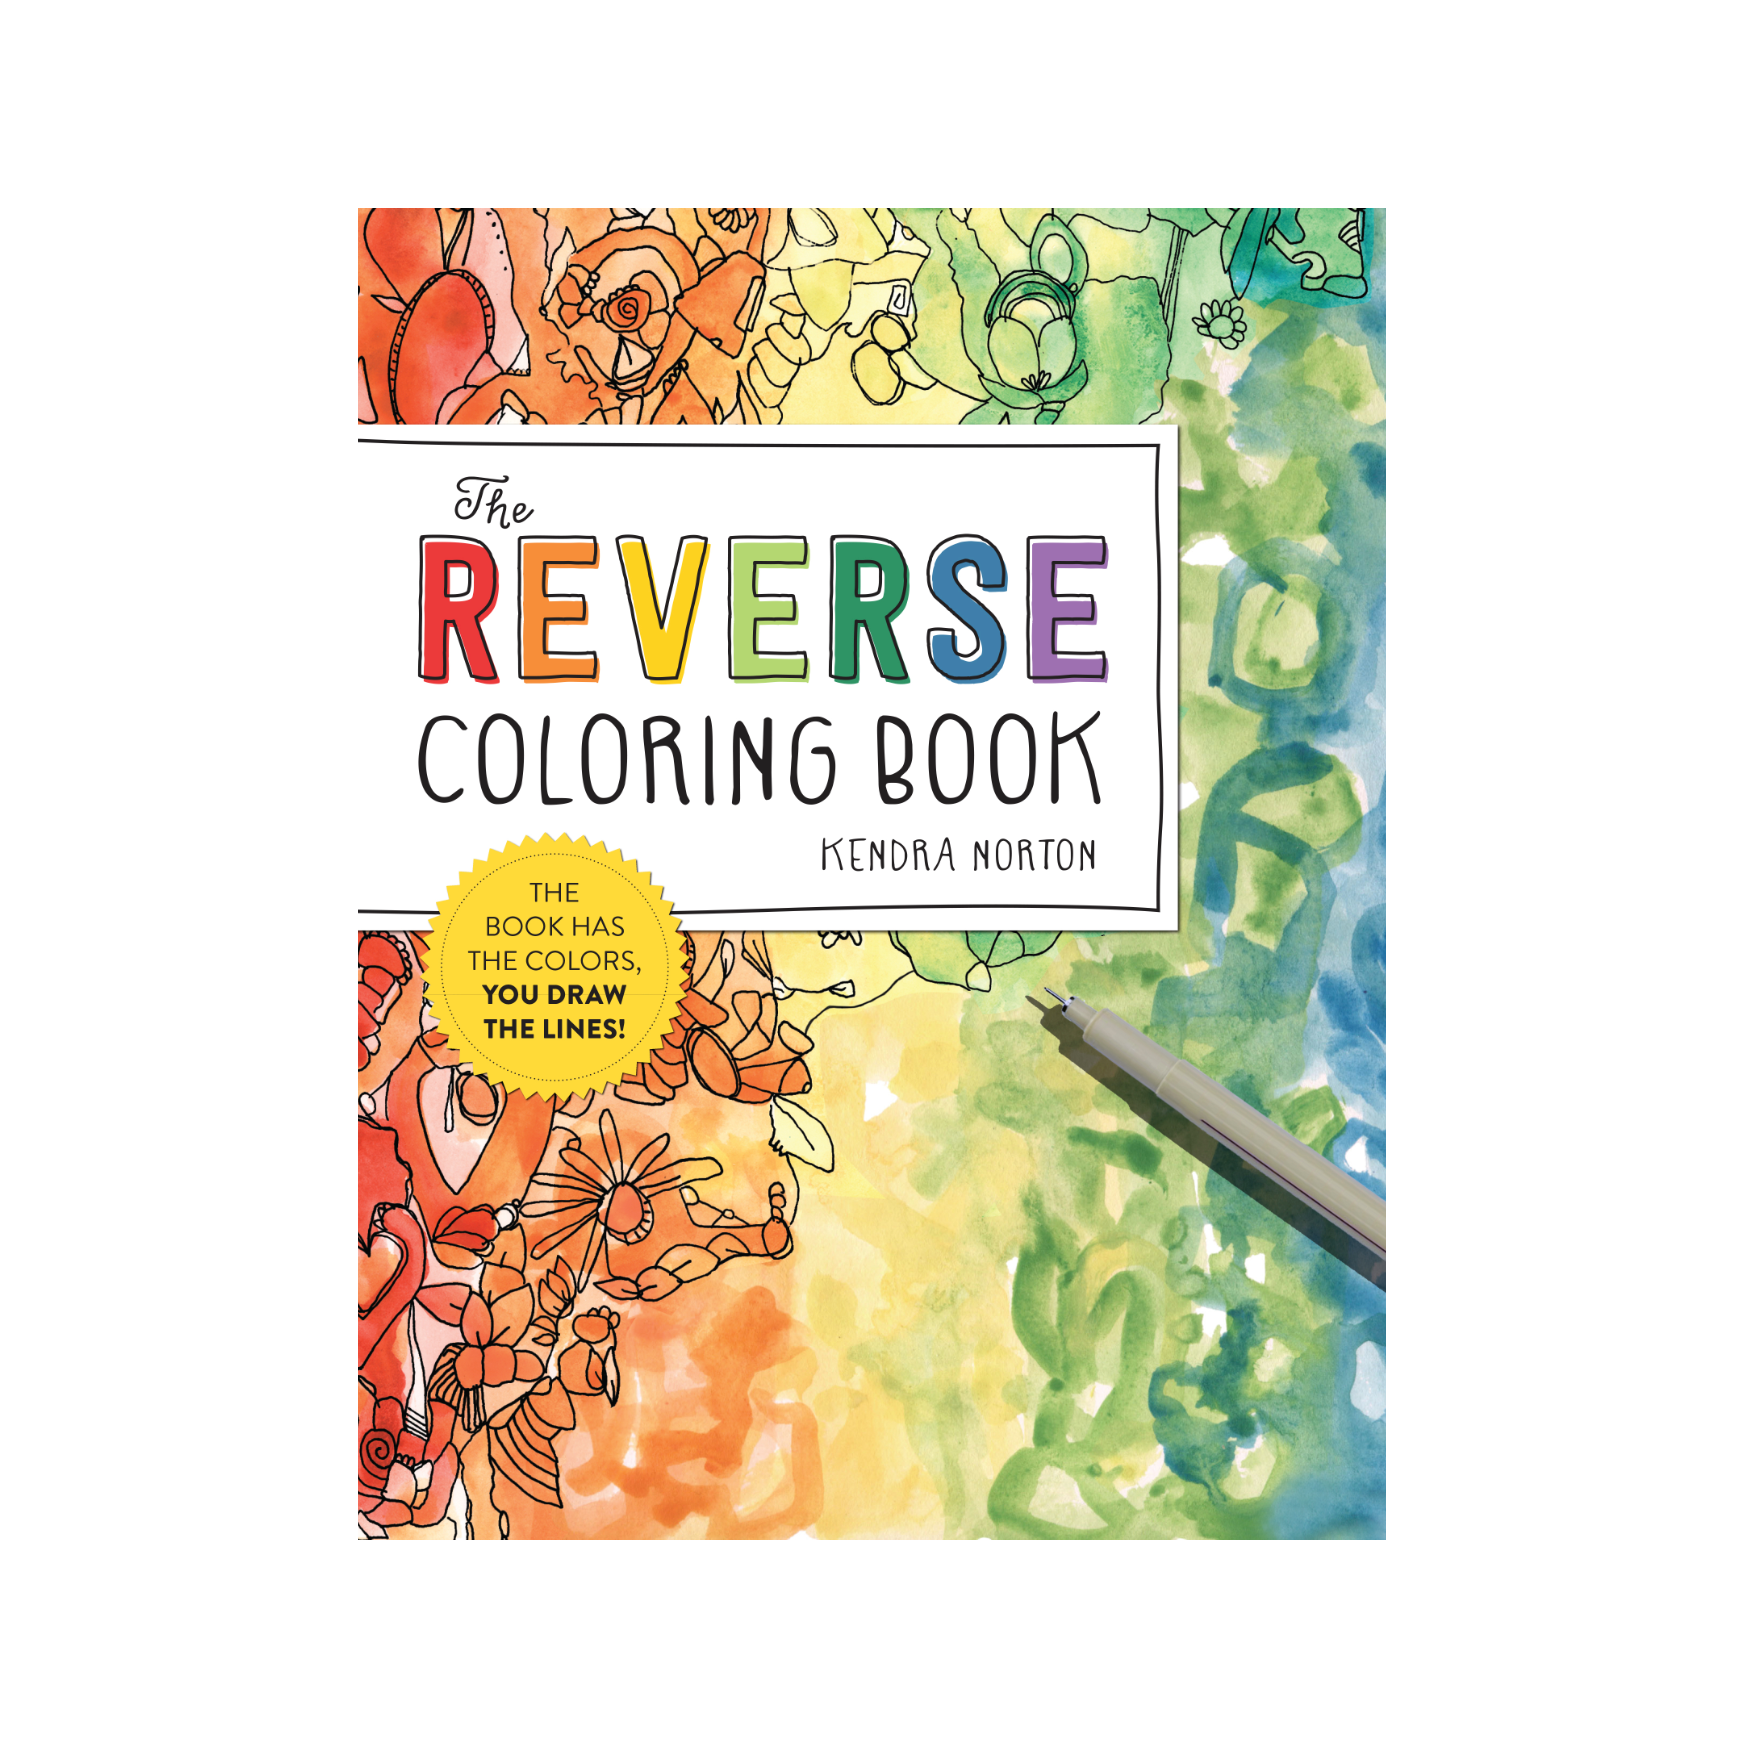 Gel Pen vs. Marker: Coloring My Own Coloring Book